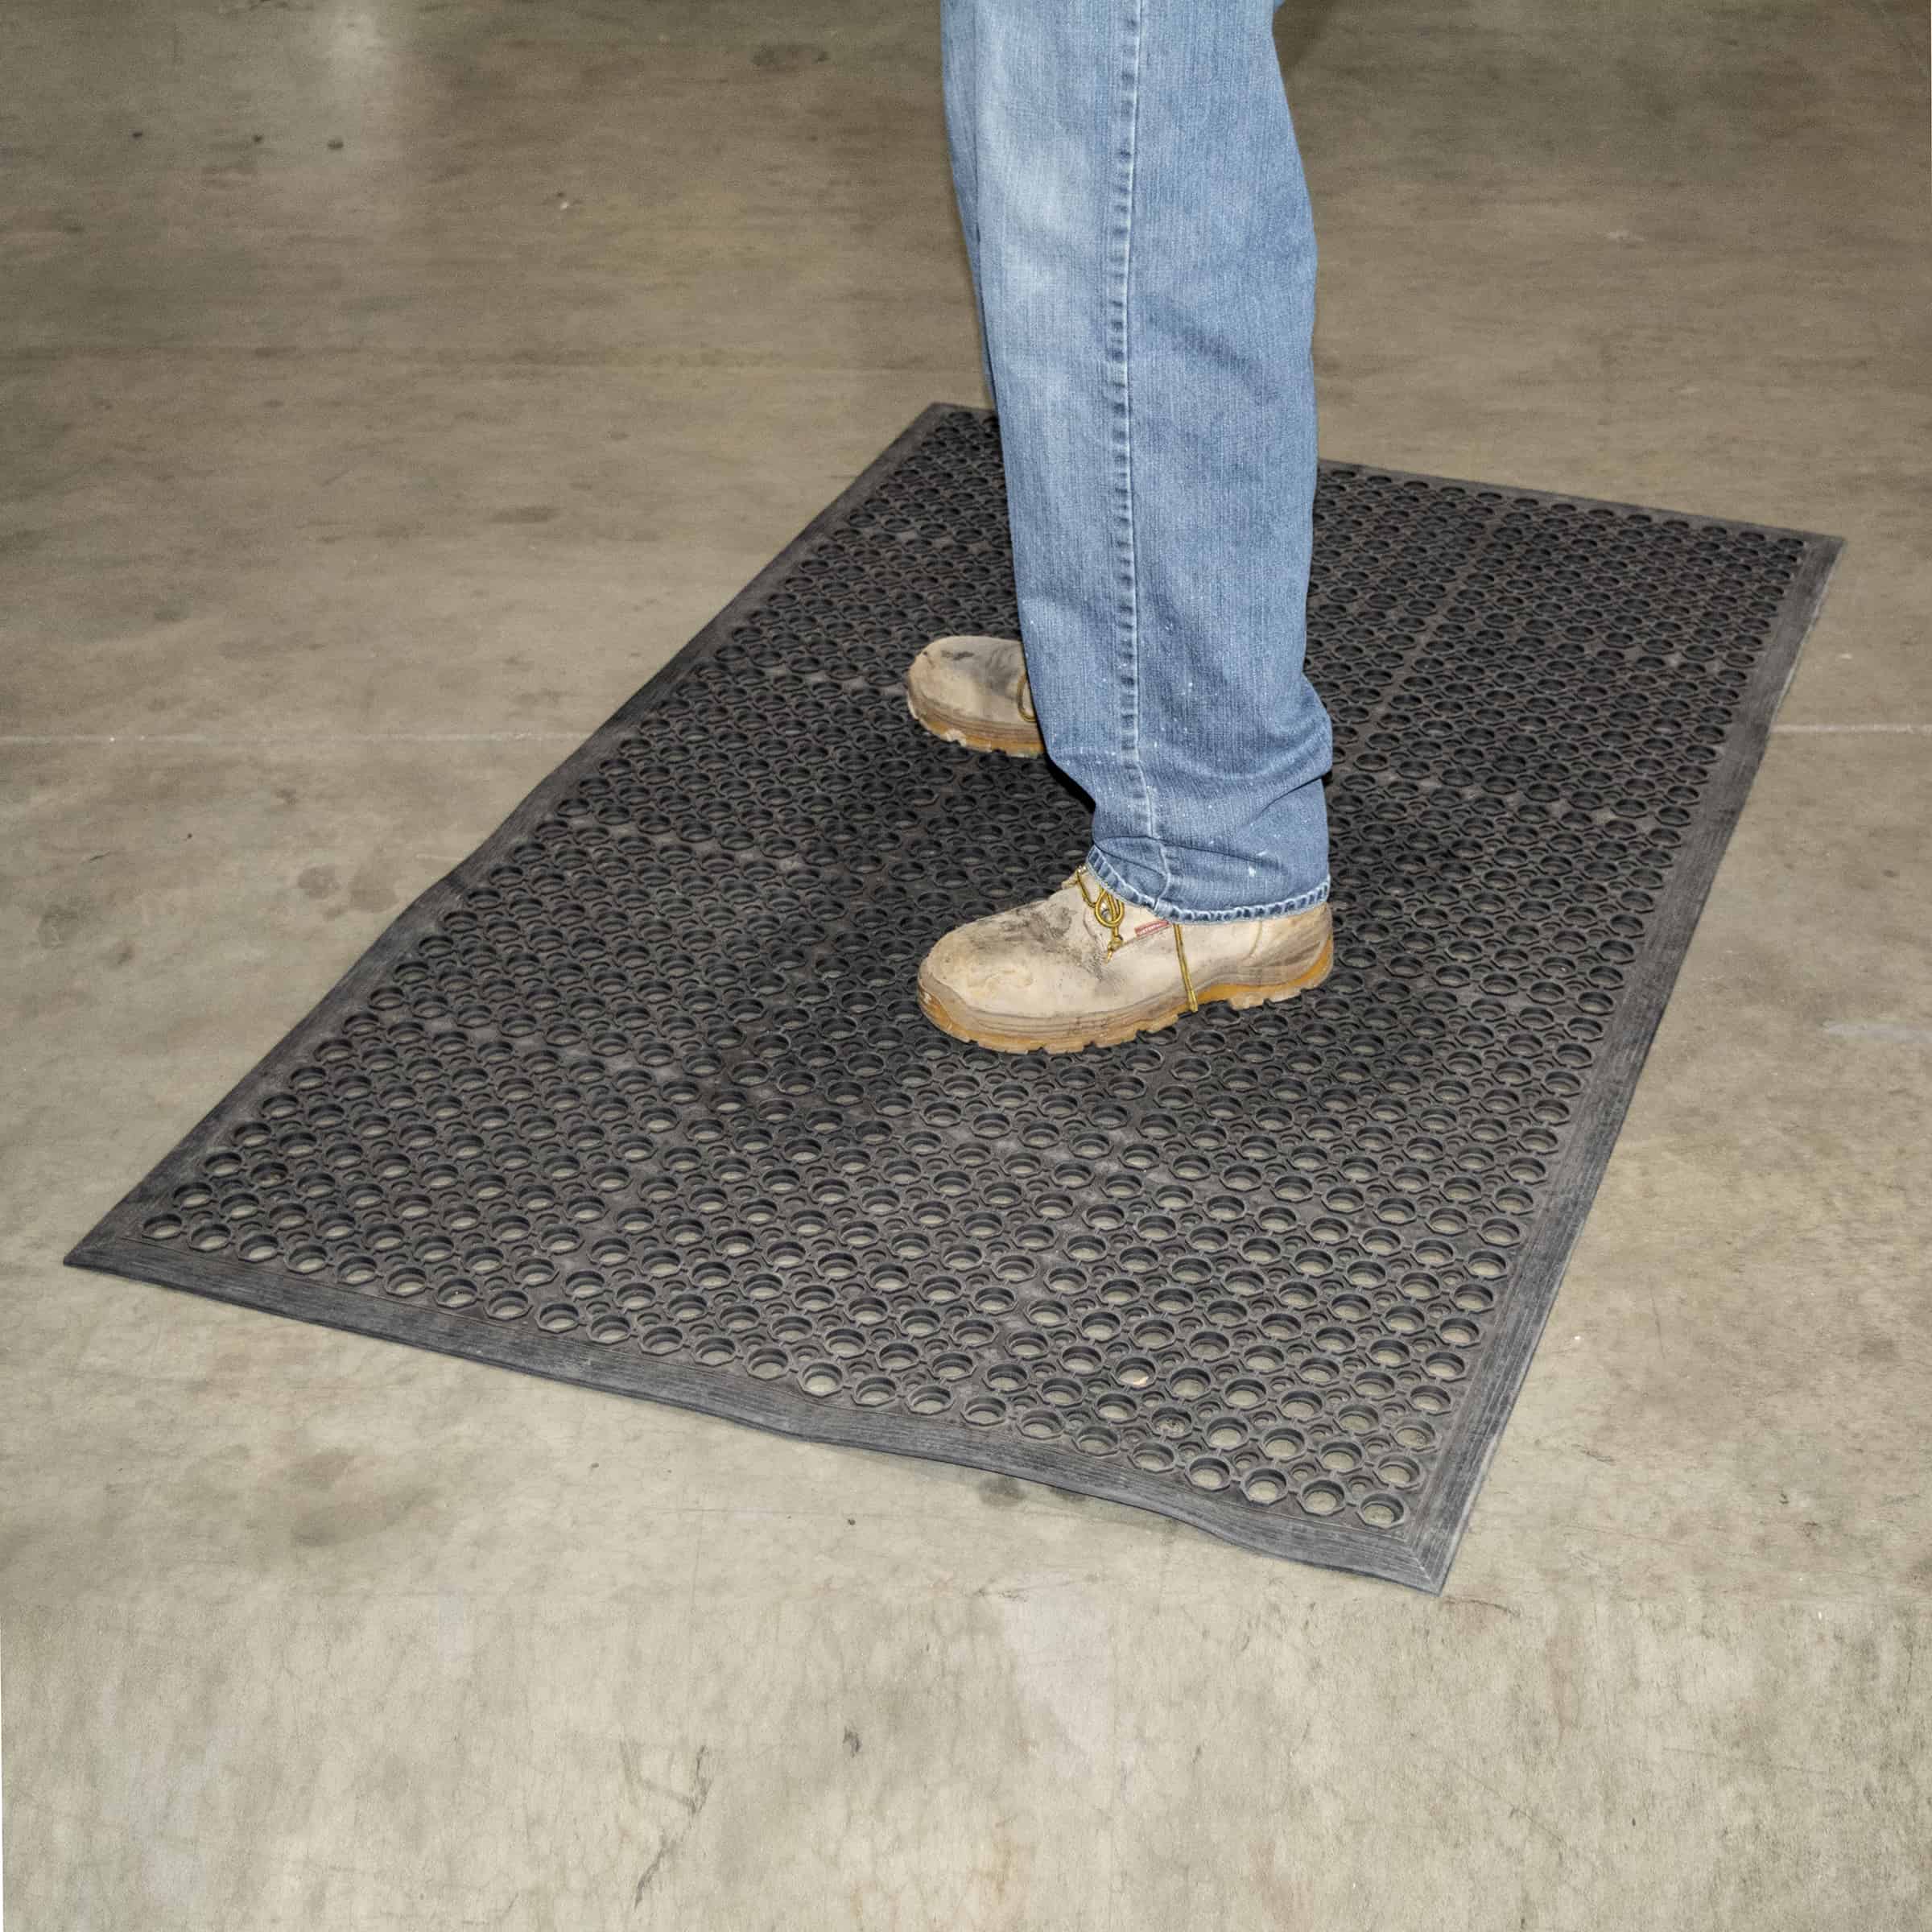 Buffalo Tools Indoor/Outdoor Durable Anti-Fatigue 36 in. x 60 in. Industrial Commercial Restaurant Rubber Floor Mat in Black (50-Pack)